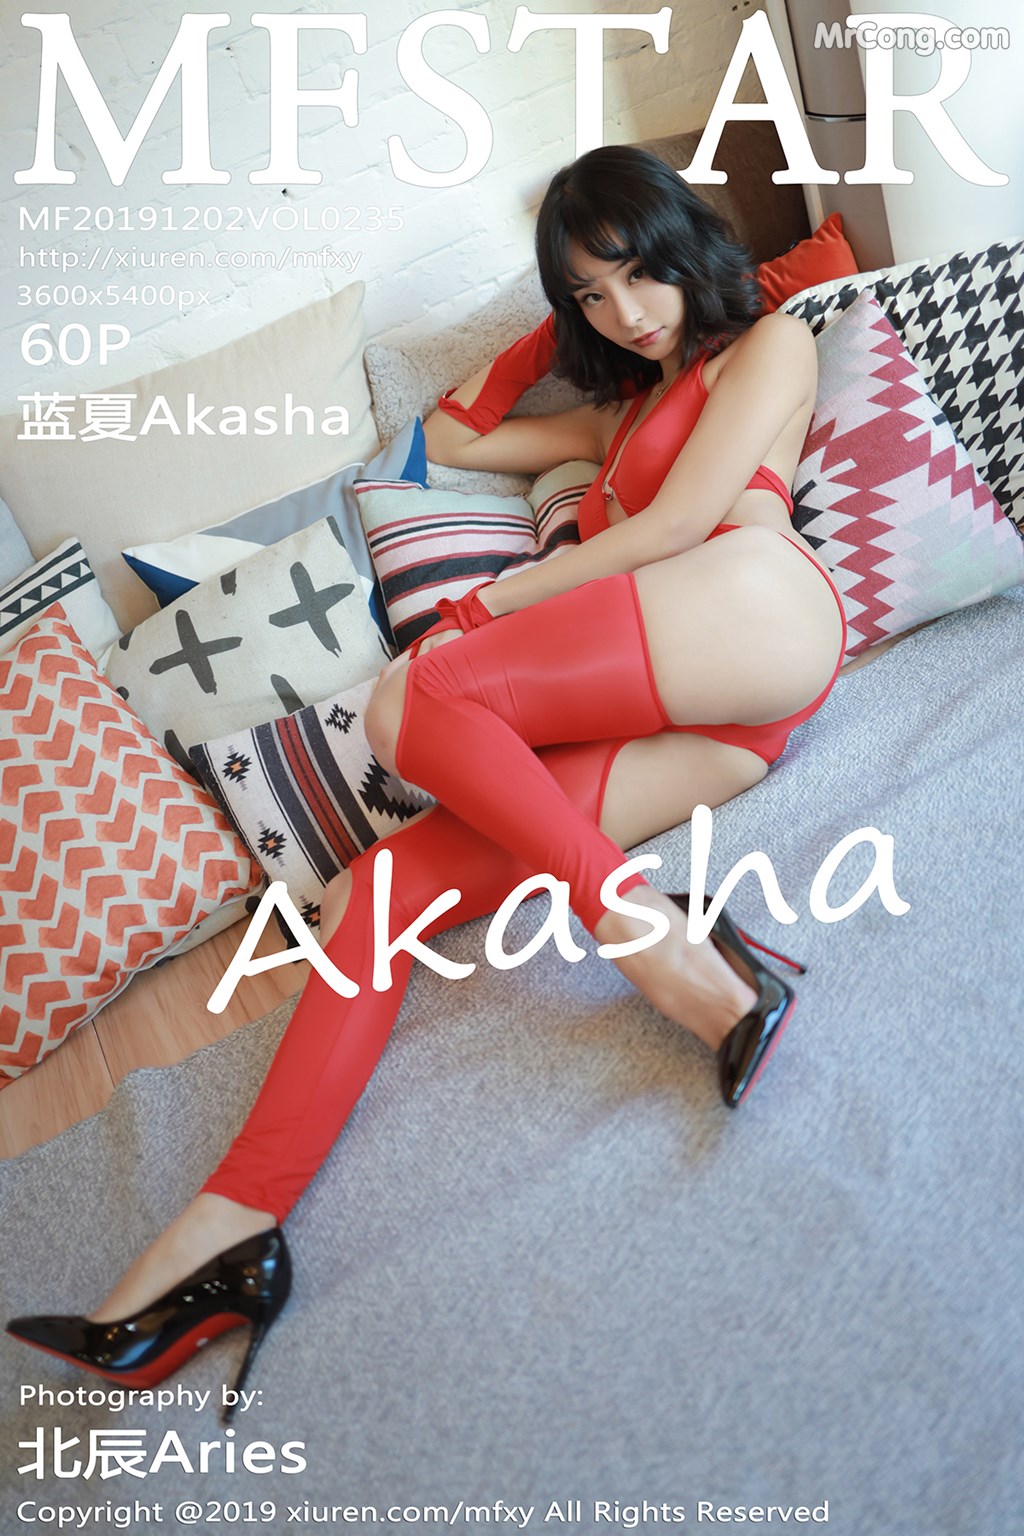 MFStar Vol. 235: 蓝 夏 Akasha (61 pictures)